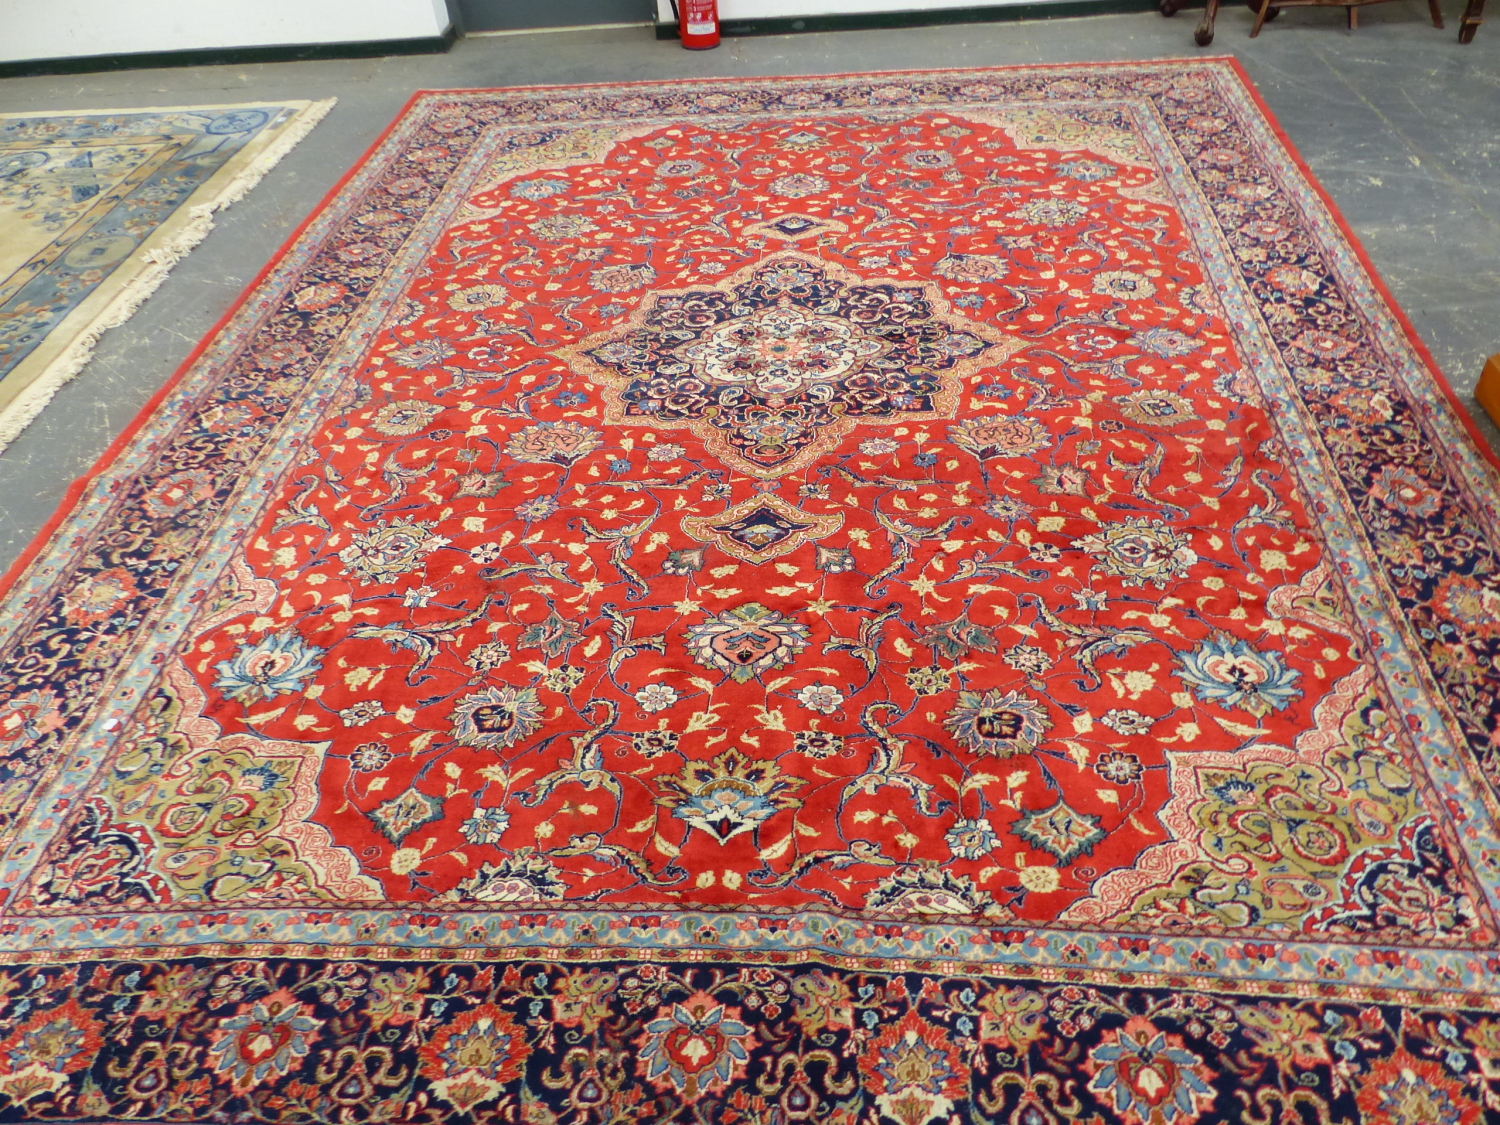 A PERSIAN KASHAN CARPET, 433 x 319cms